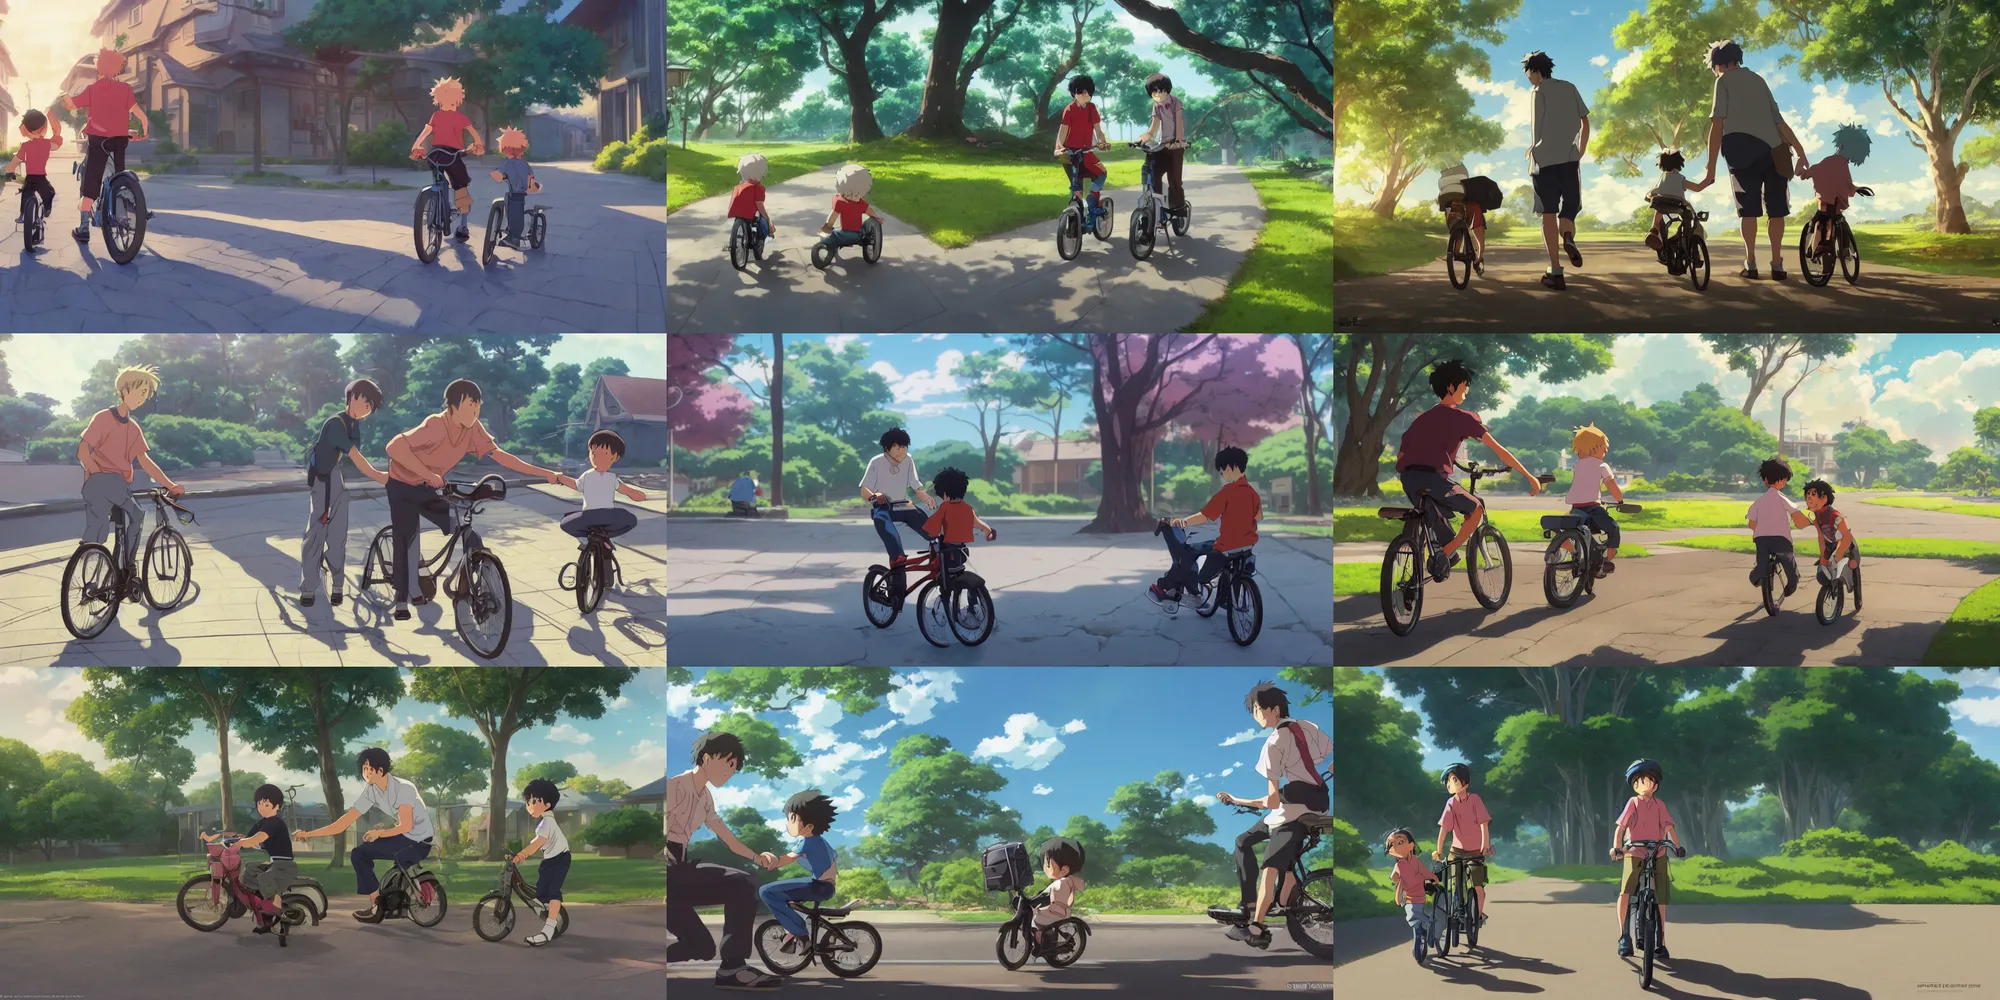 A Anime Girl With A Cape Riding a Bike | Anime girl, Anime images, Anime